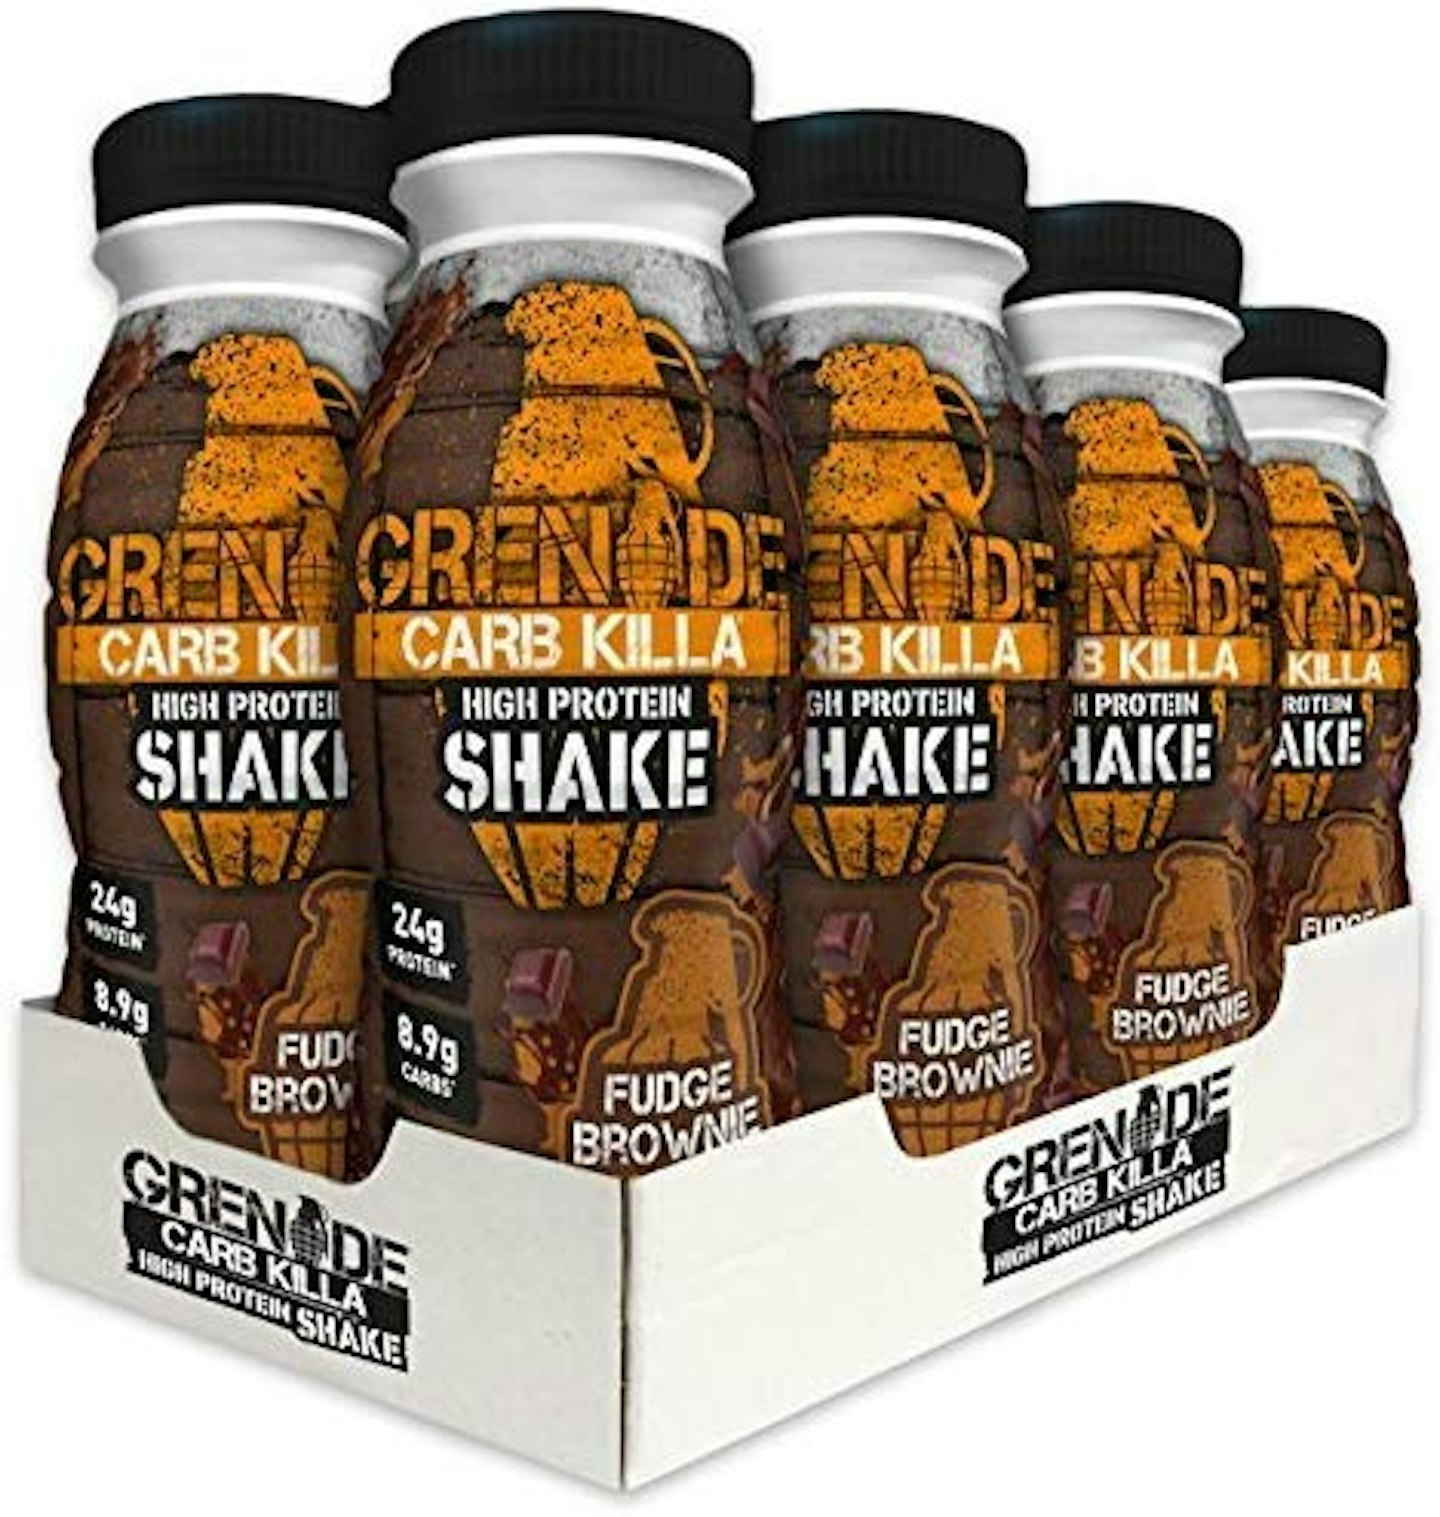 Grenade Carb Killa Fudge Brownie High Protein Shake, x 8 £14.99